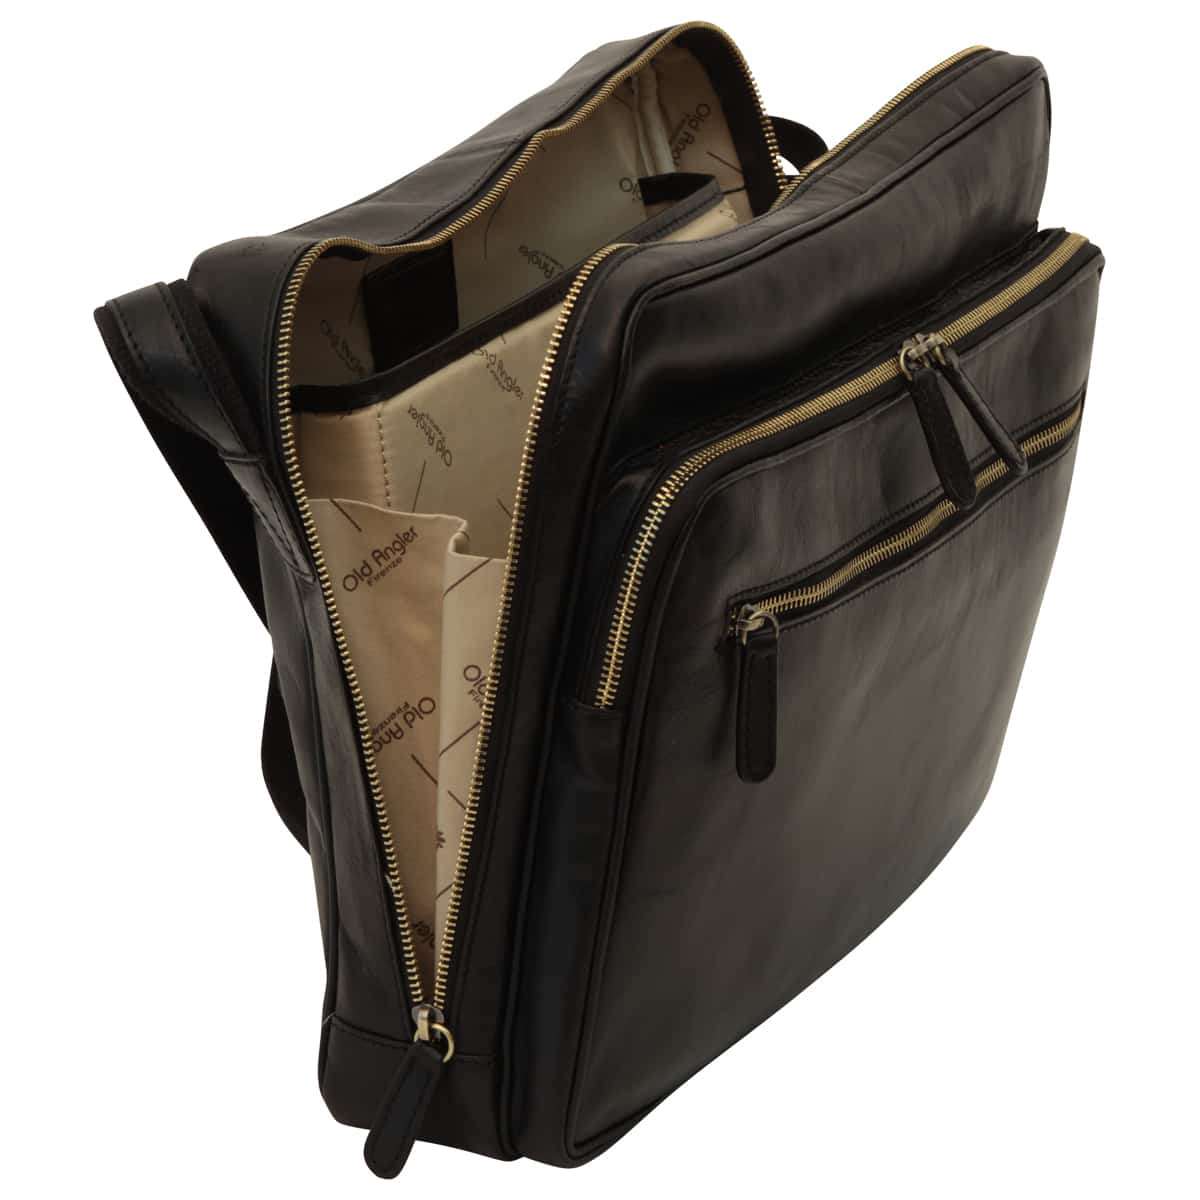 Large leather bag with zip closures - Black | 409289NE US | Old Angler Firenze